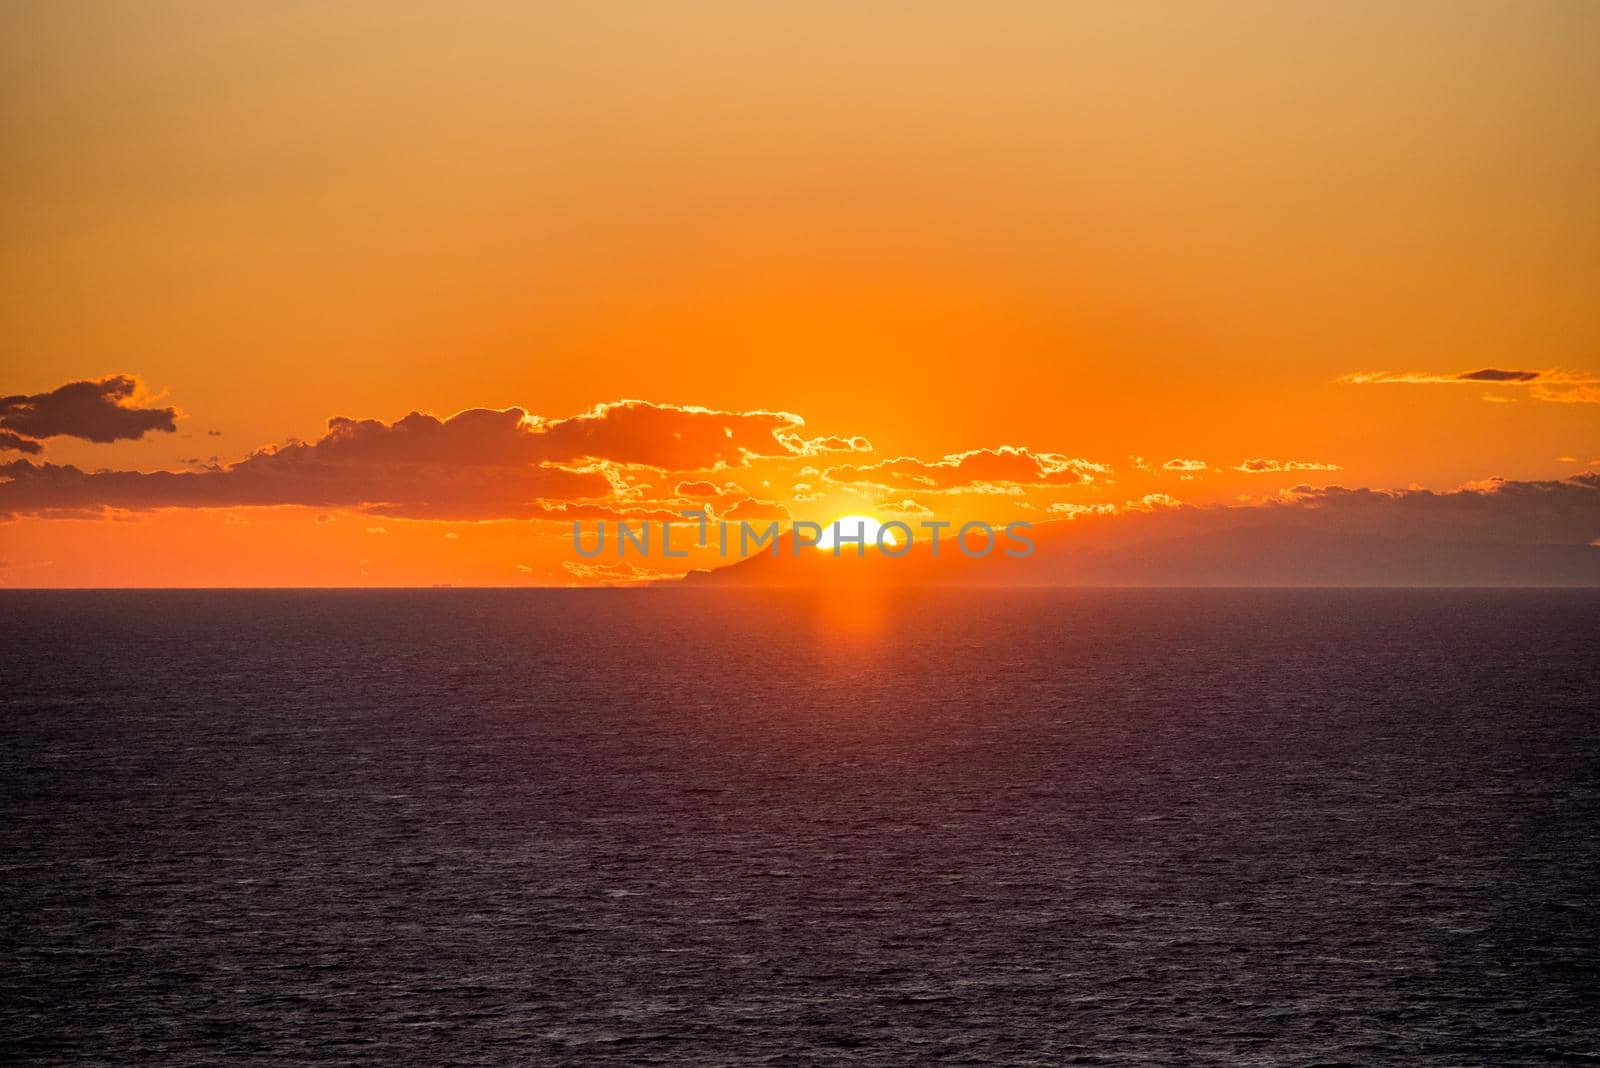 Sunset in Purtas del Cielo, Ibiza, Islas Baleares, Spain by martinscphoto